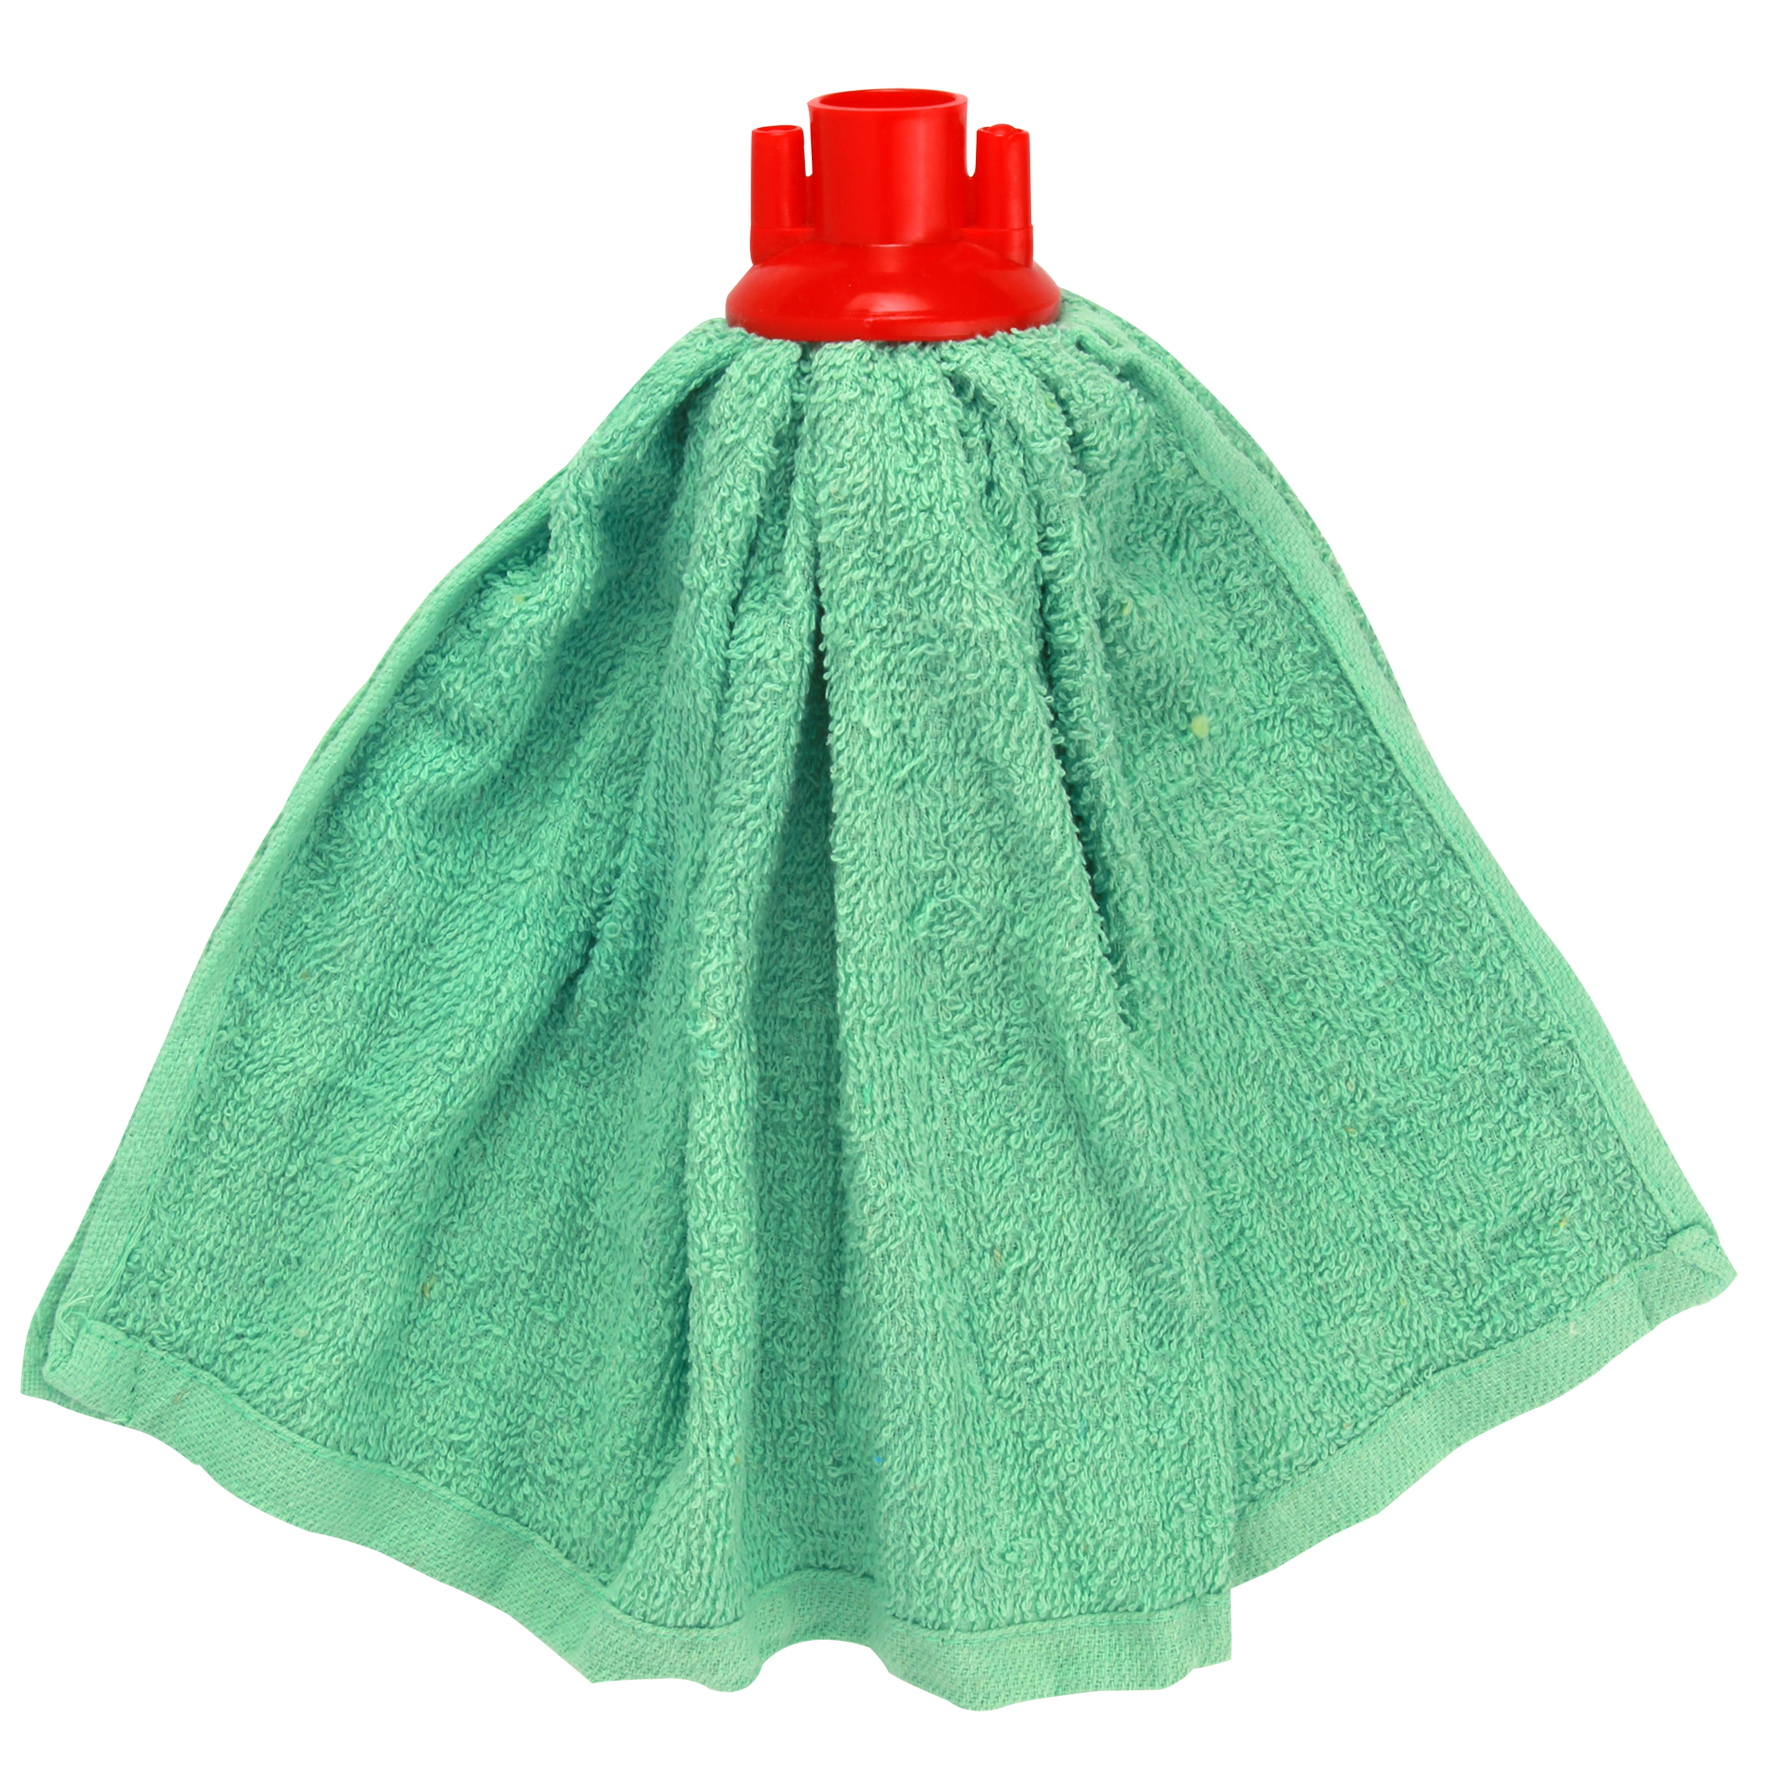 Household “skirt” type, sponge clothe mop, 100% cotton